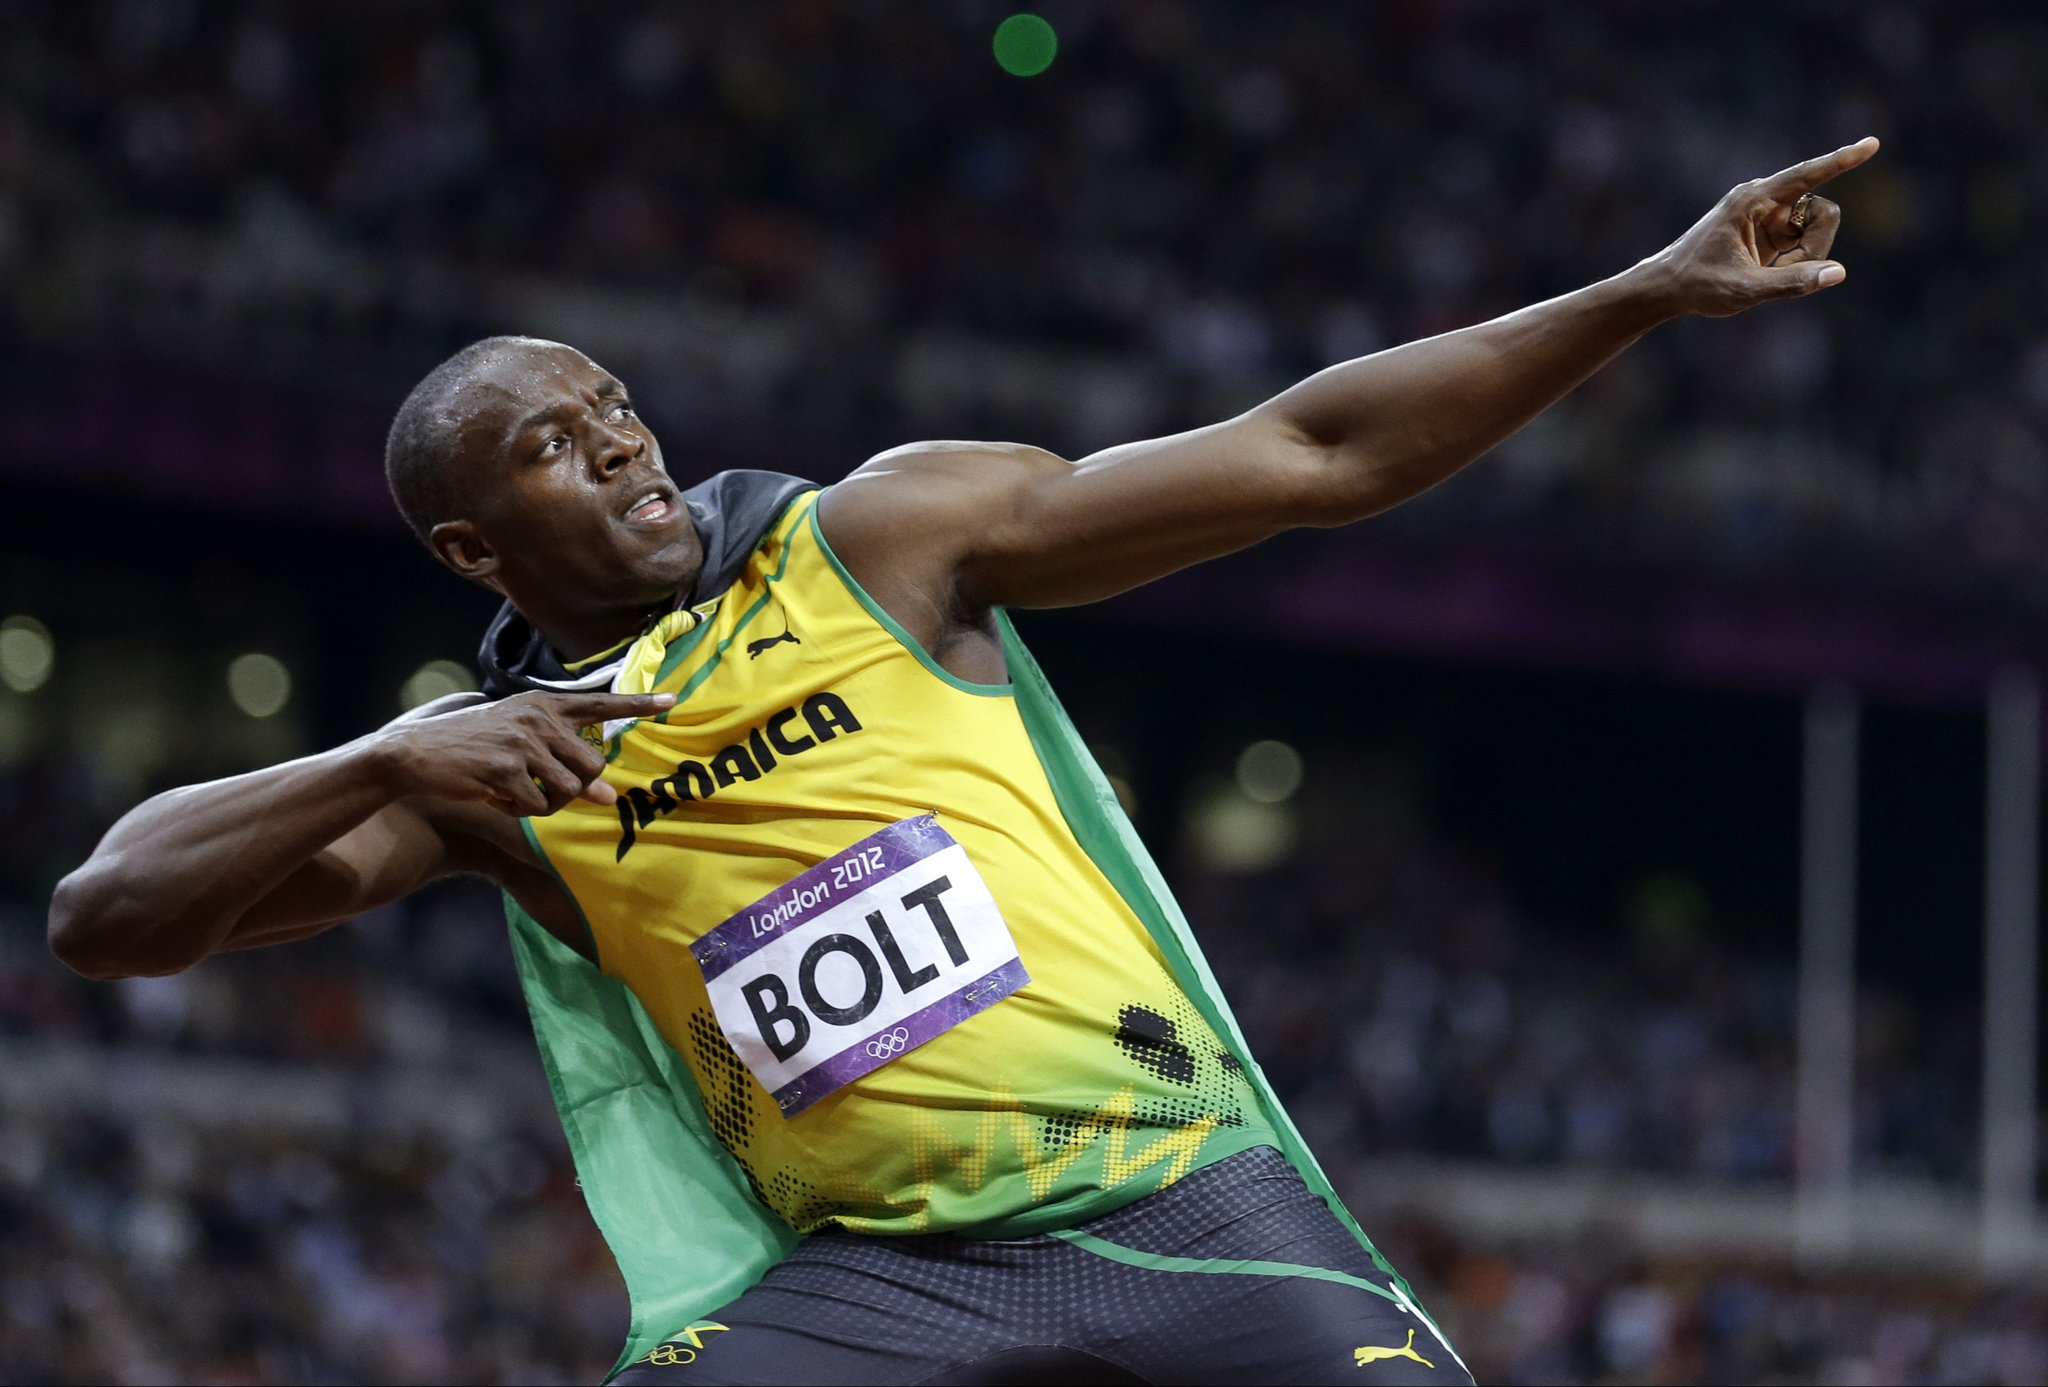 Usain Bolt is worlds fastes man